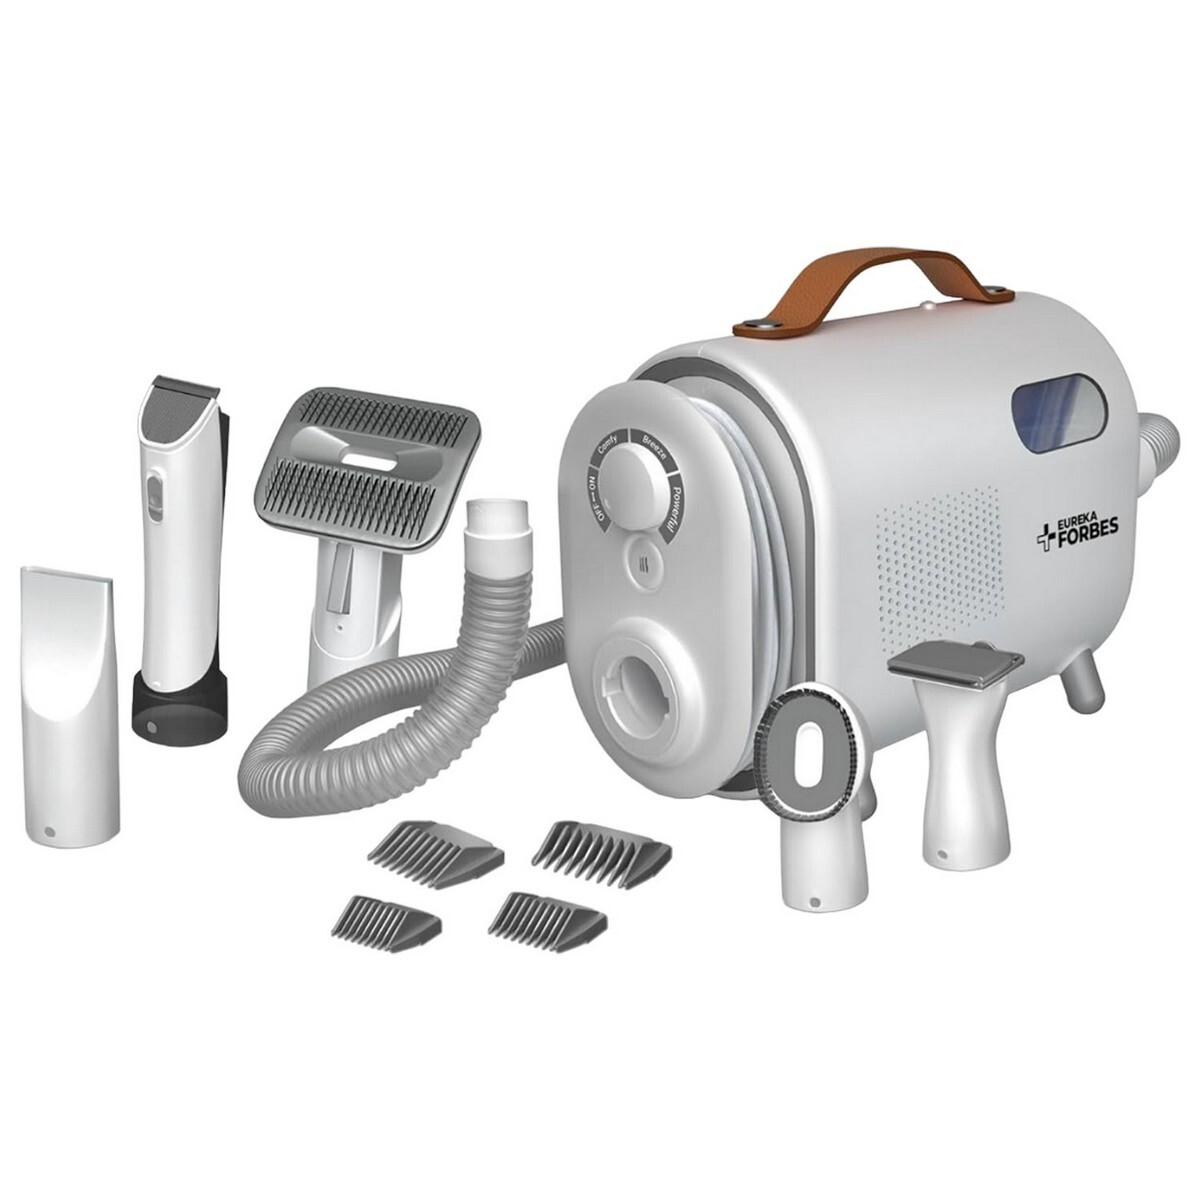 Eureka Forbes Vacuum Cleaner Buddy Pet Groom Kit